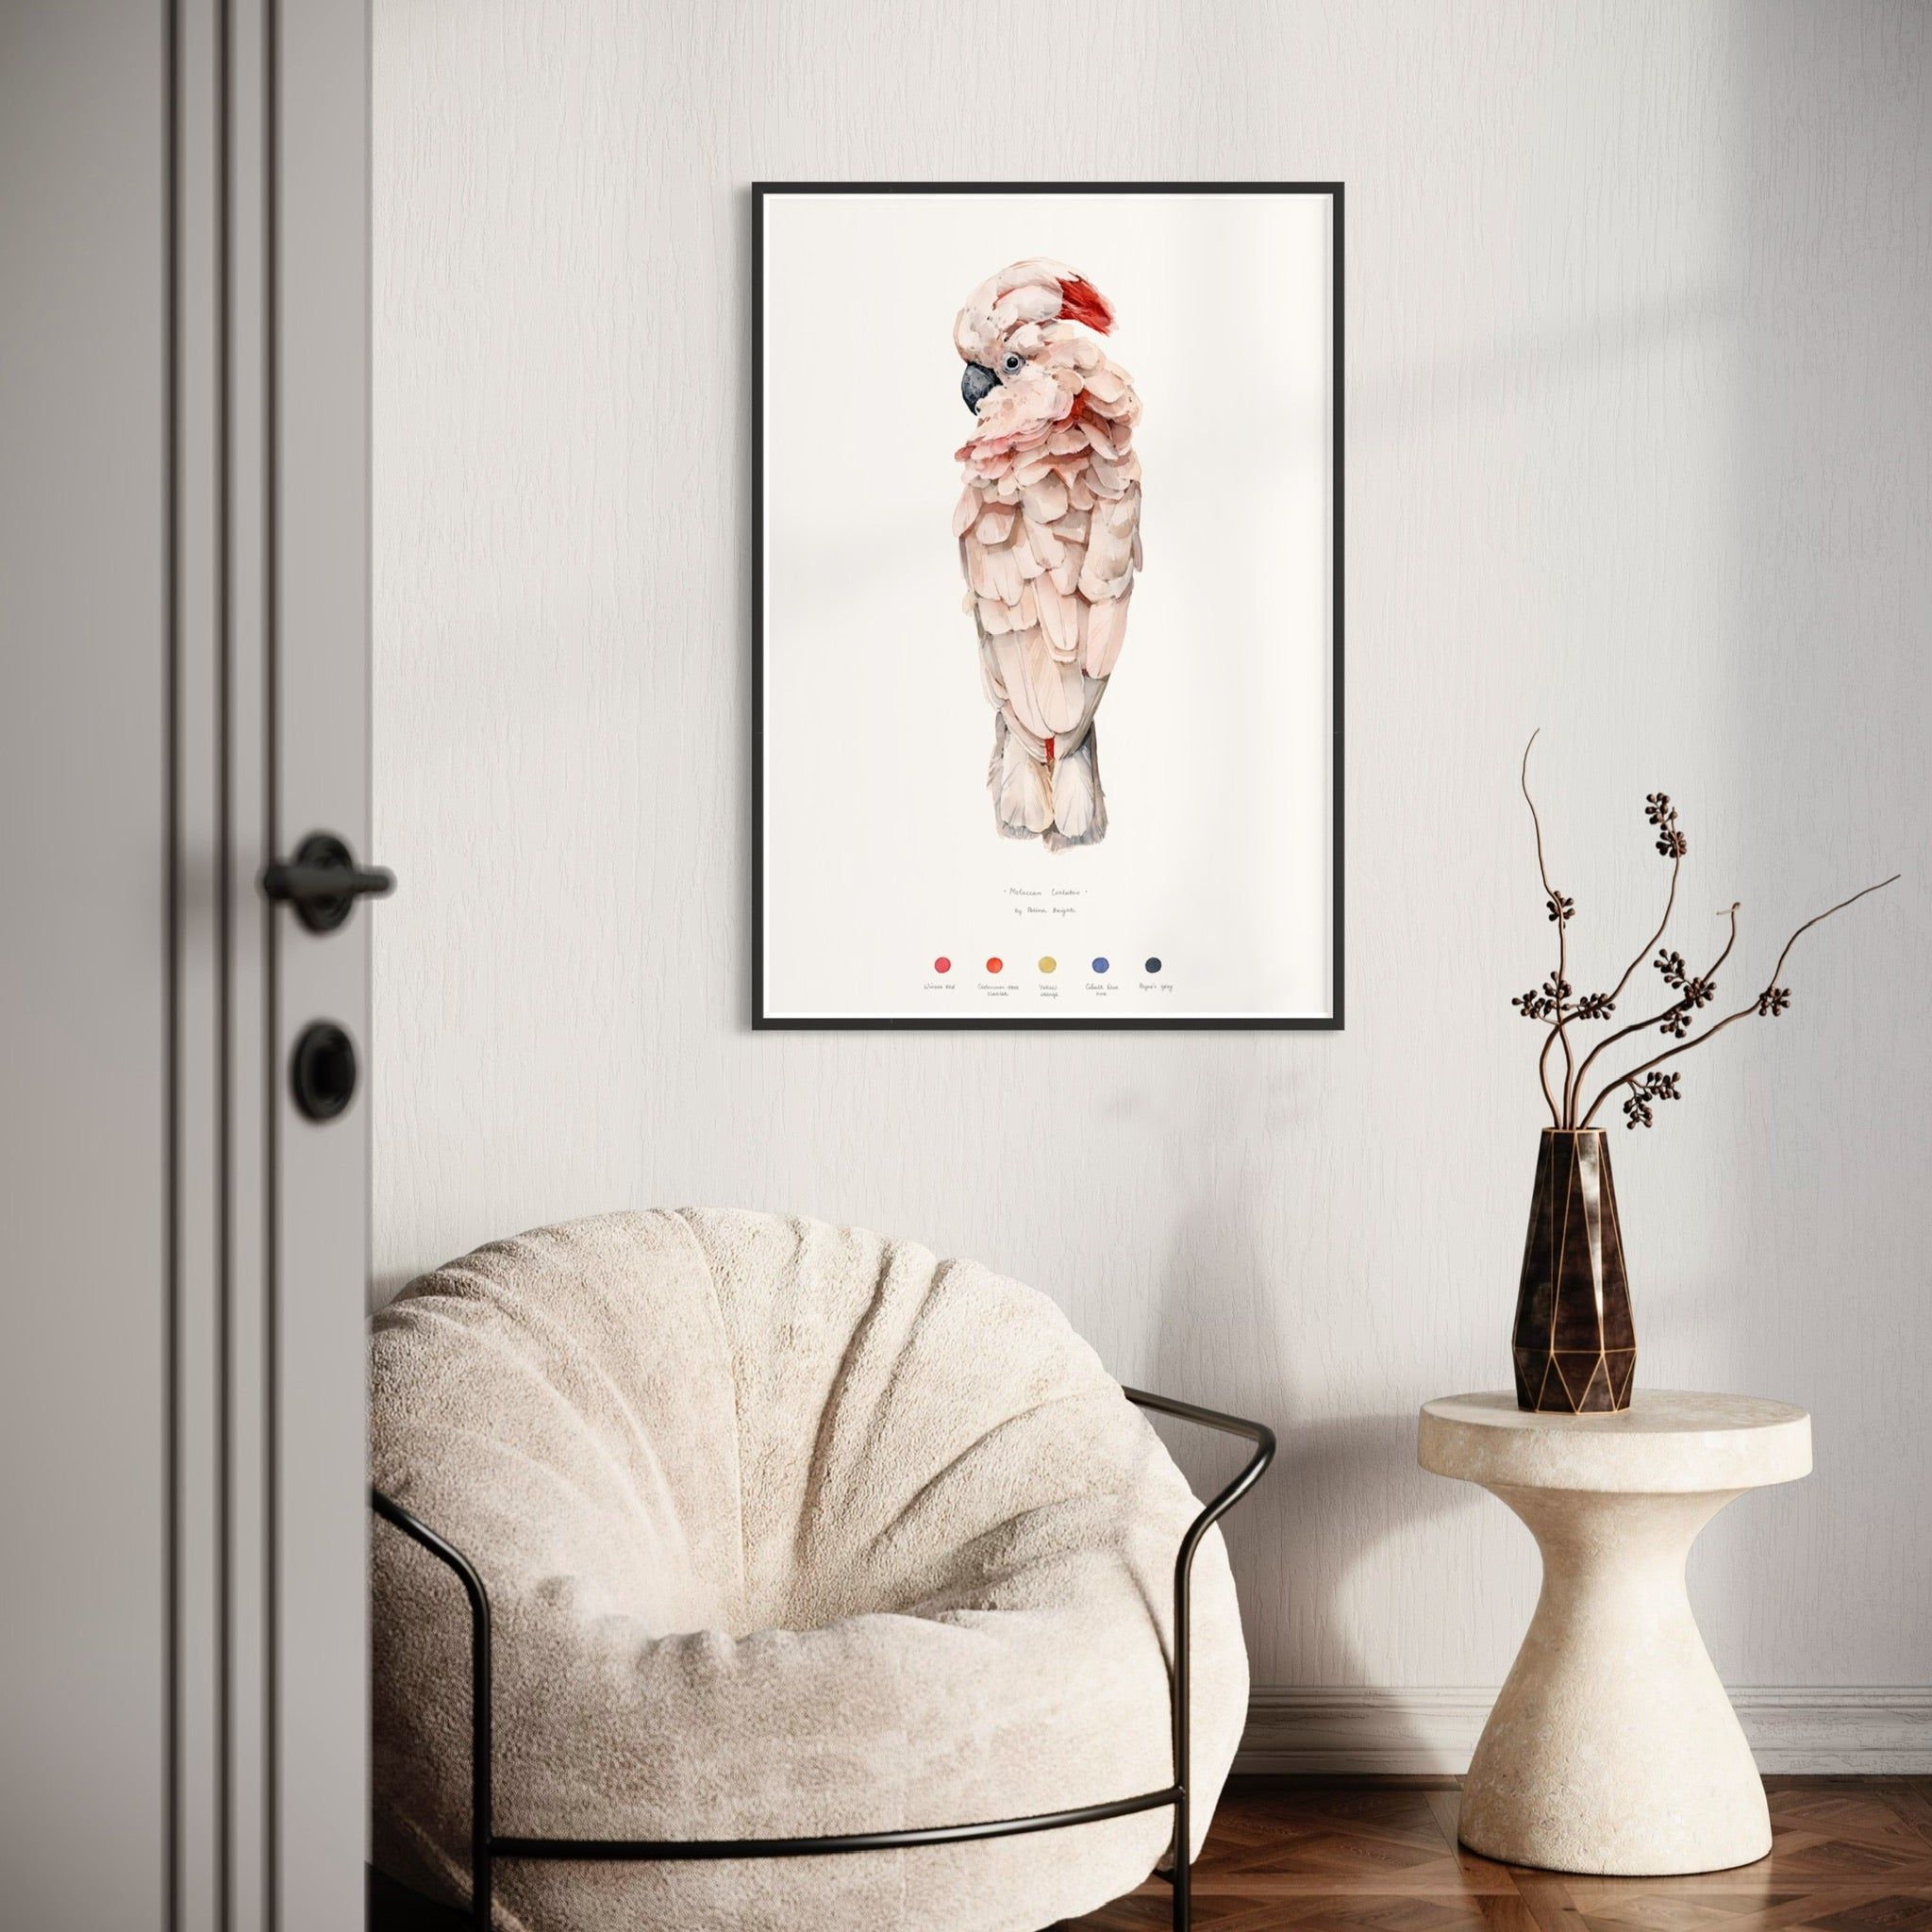 Moluccan cockatoo print by Polina Bright in interior